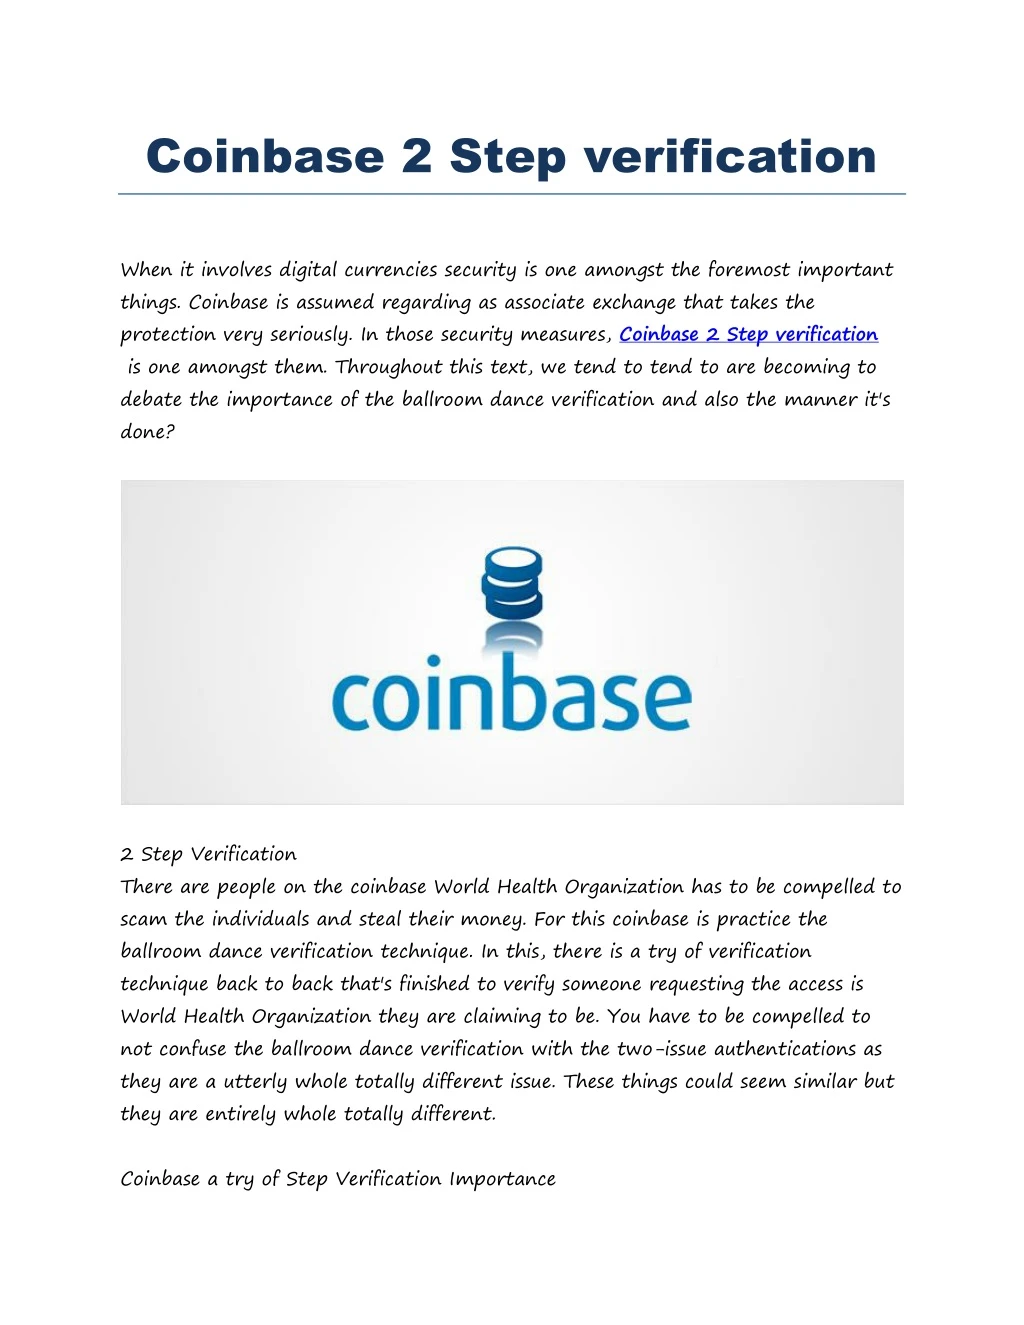 coinbase 2 step verification